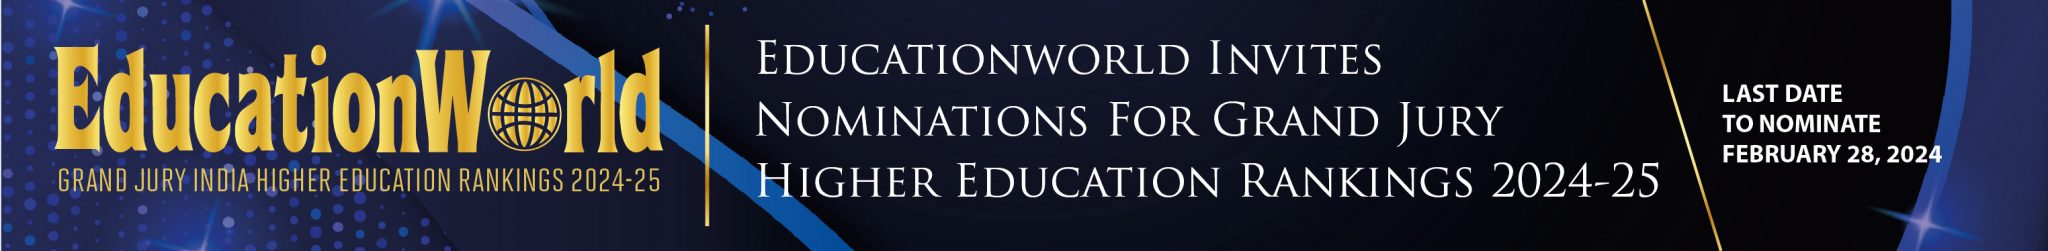 EW India School Rankings 2019-20 - EducationWorld